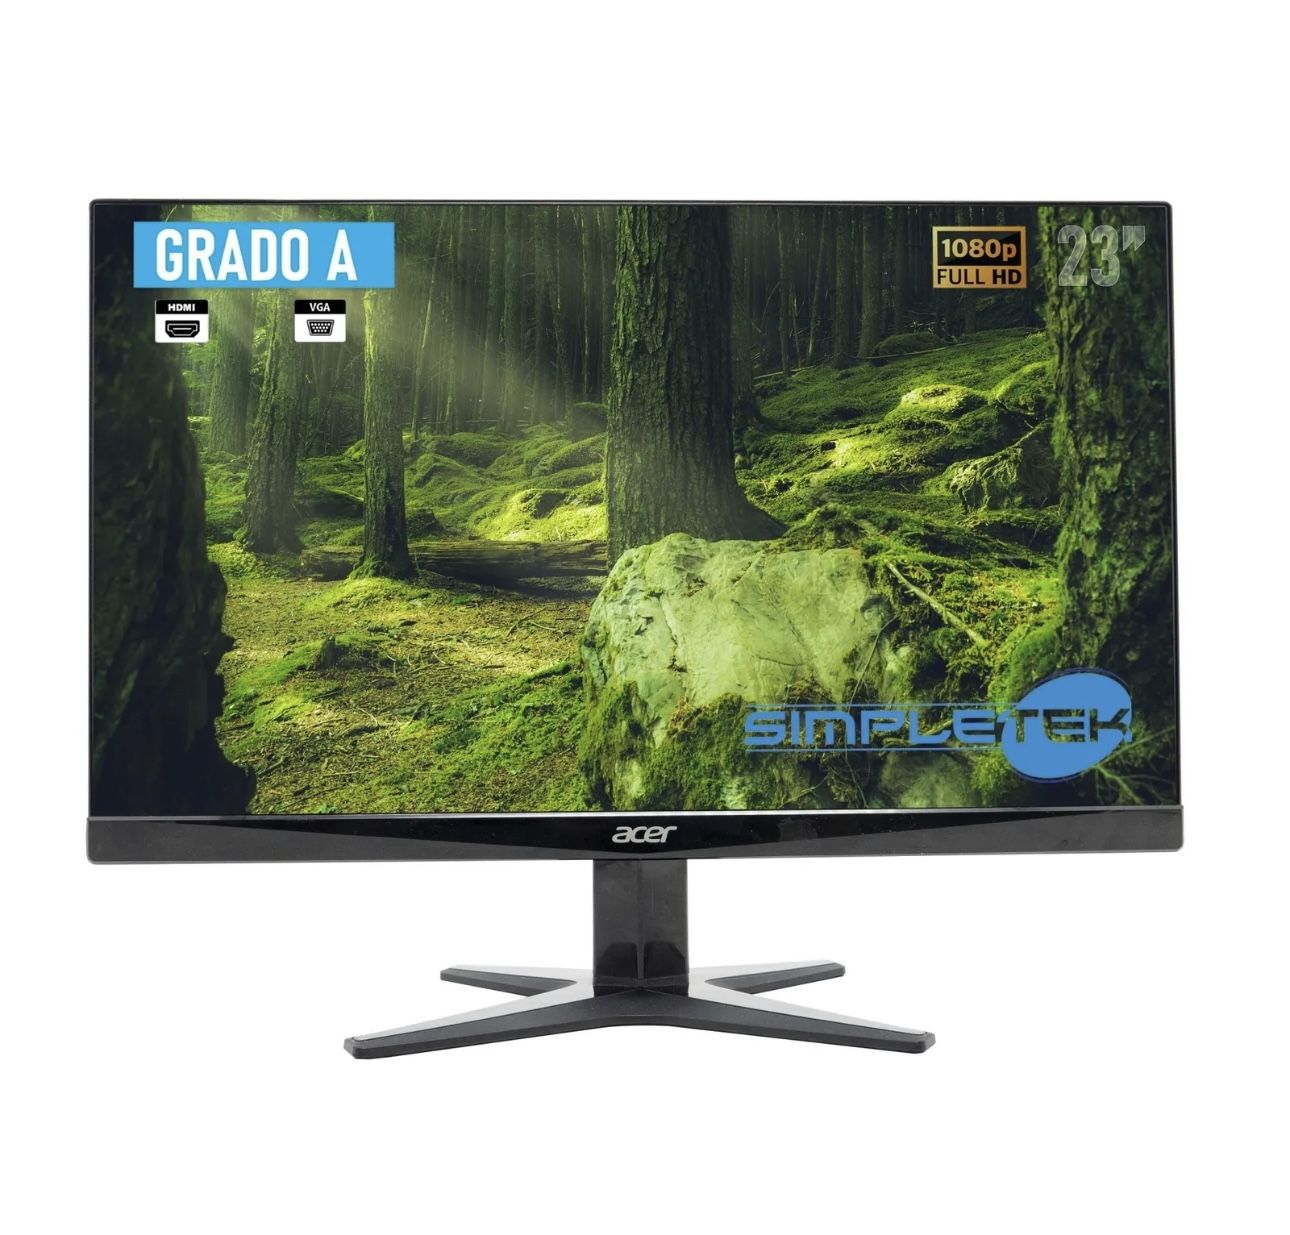 Acer Full HD 1080p 23” Monitor 